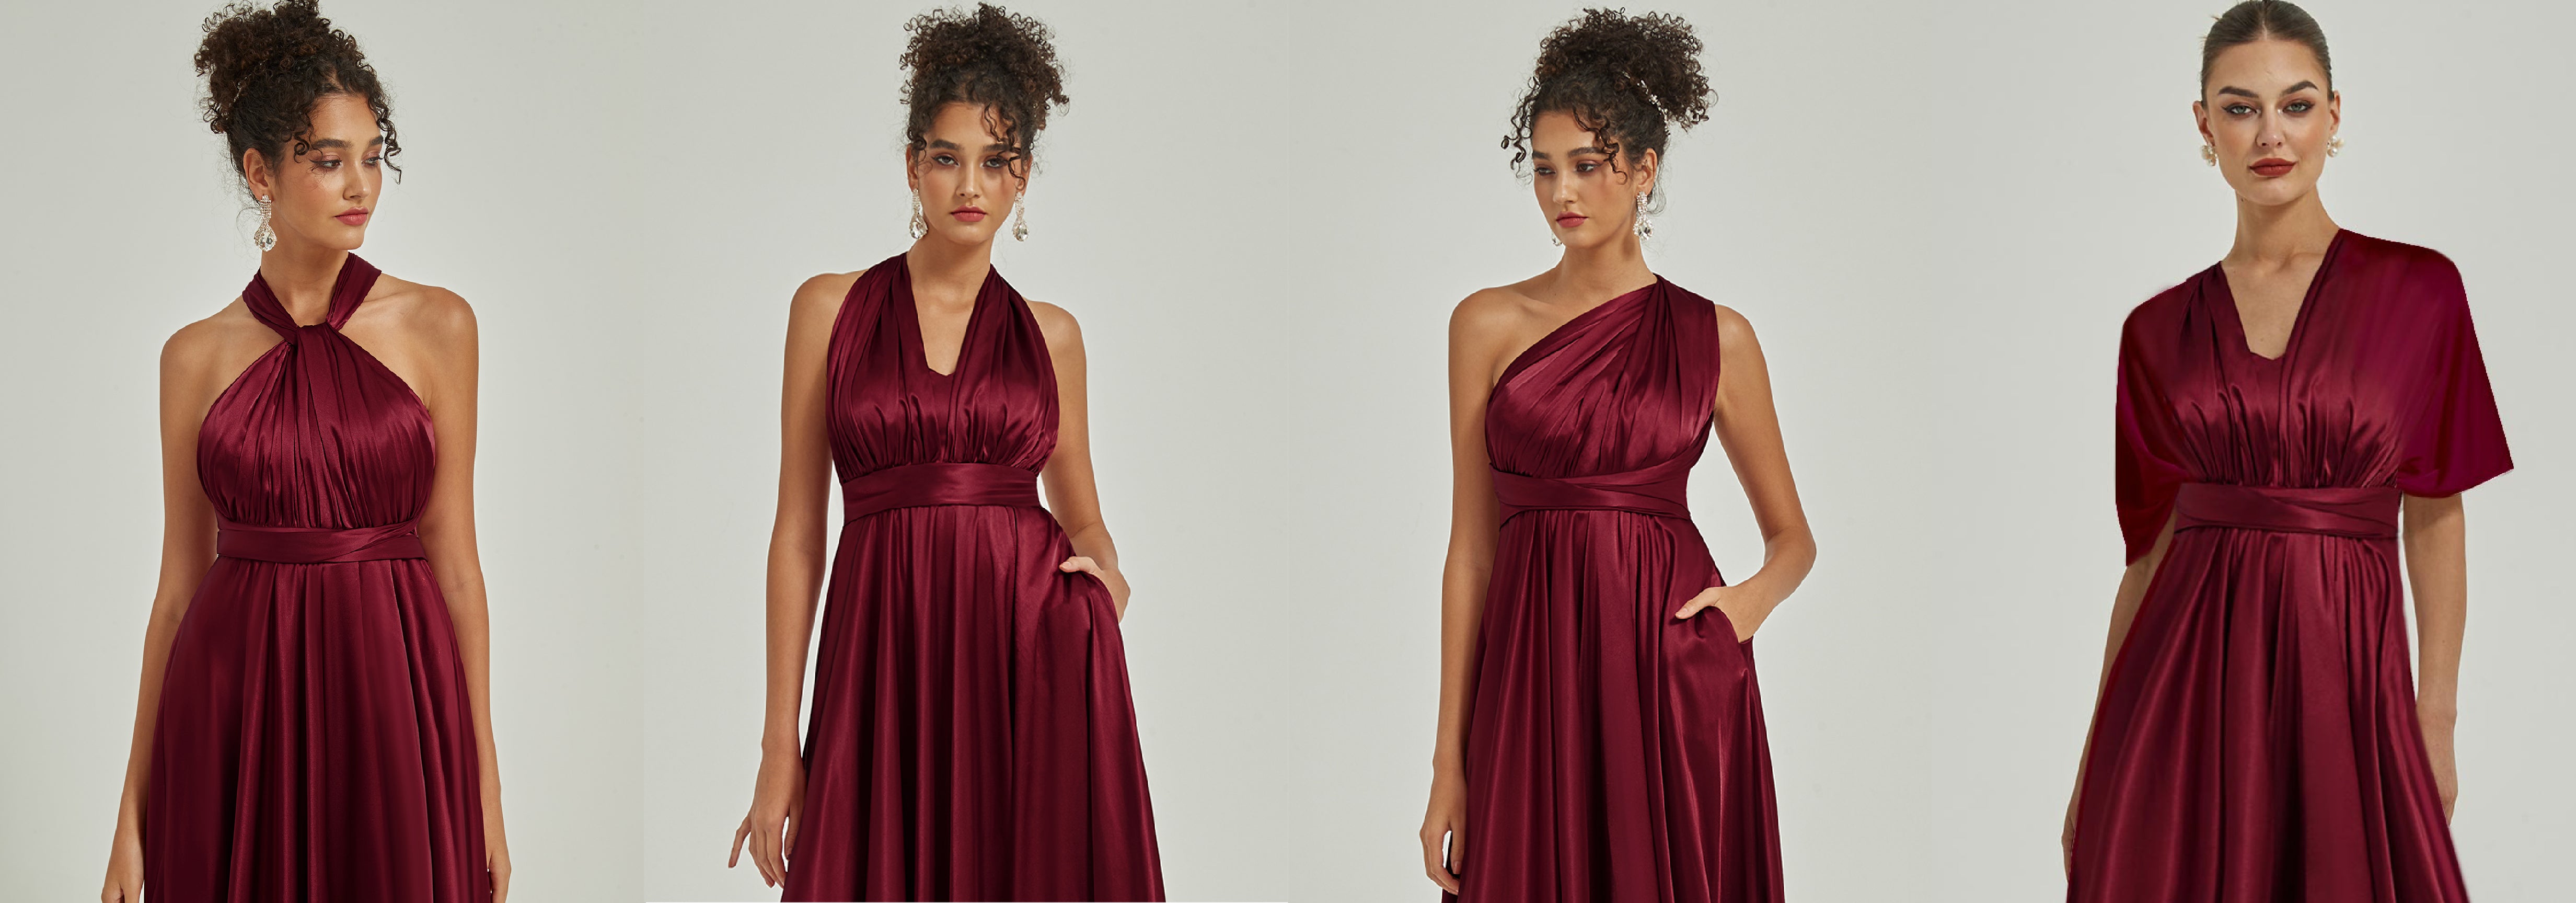 NZ Bridal satin infinity dress style inspiration